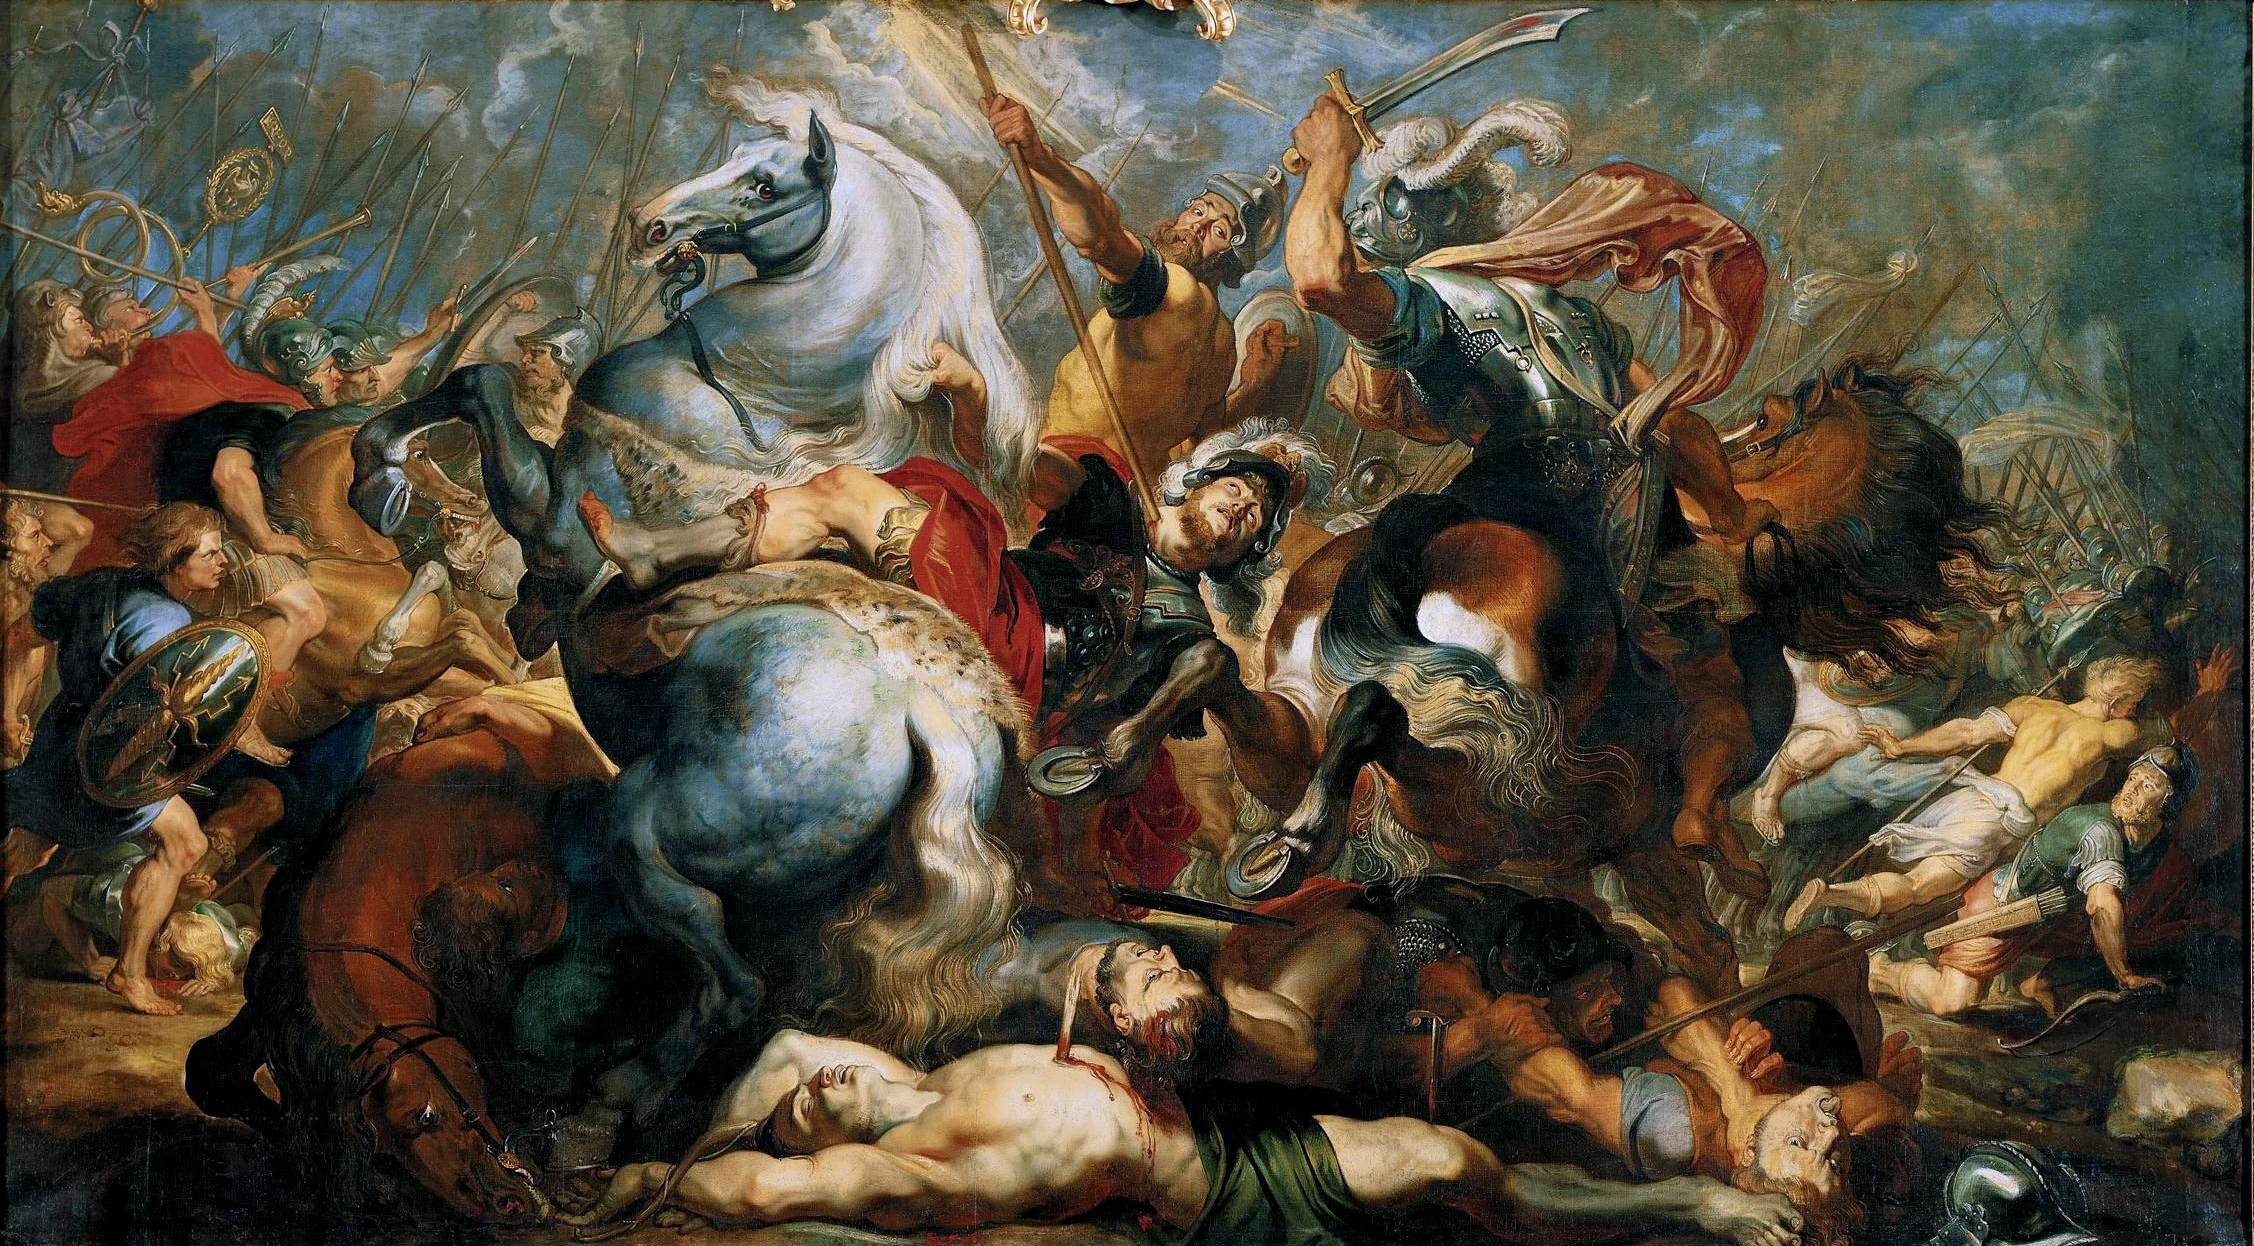 Peter Paul Rubens, The Artists